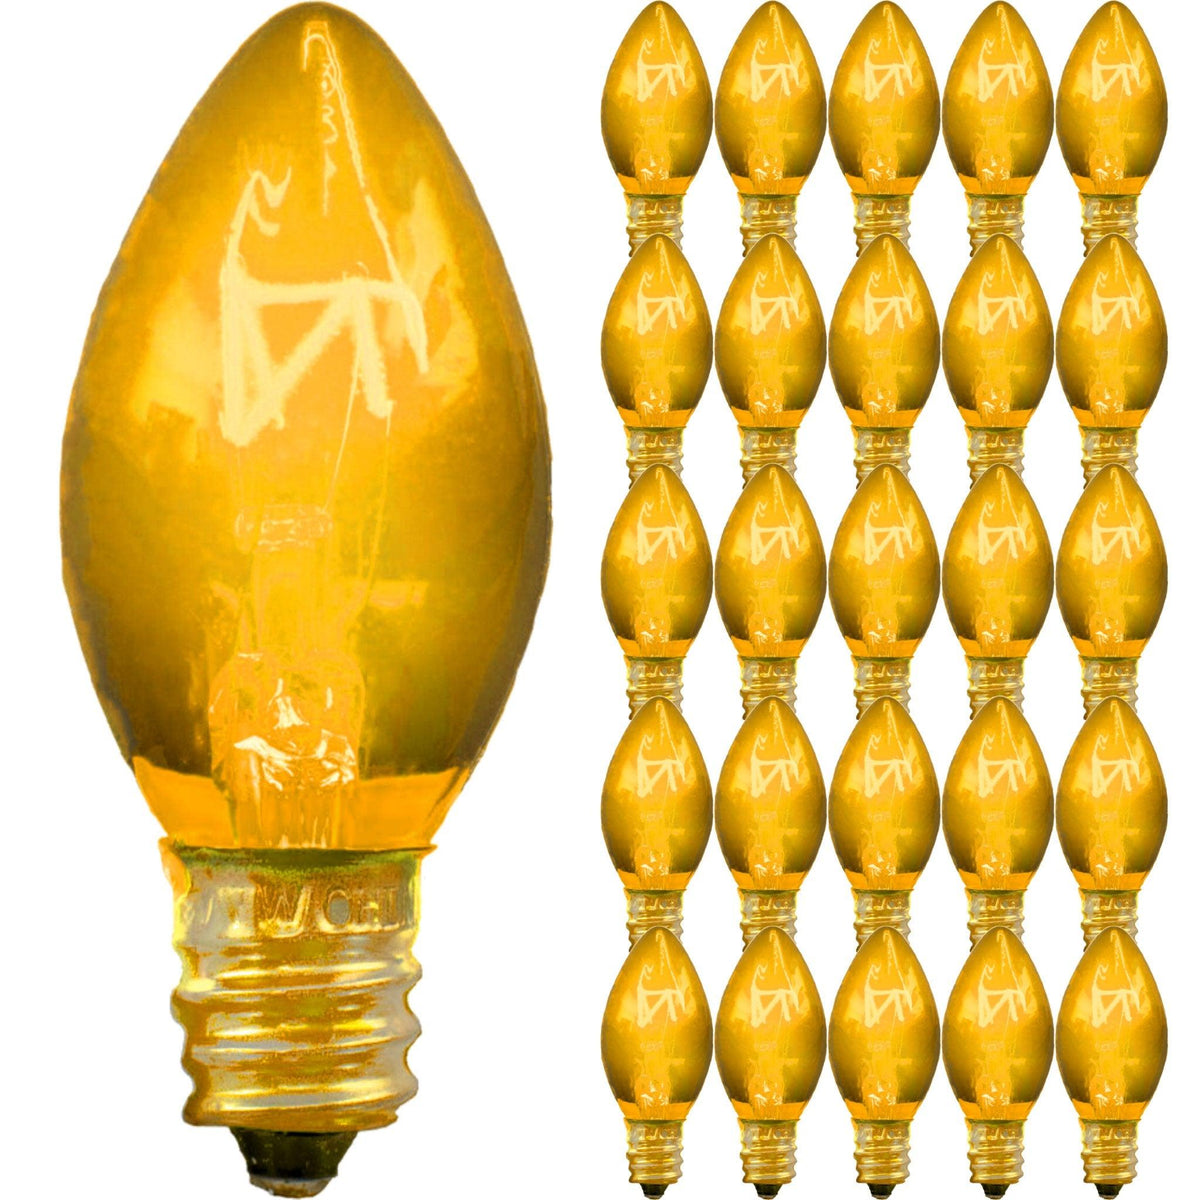 C-7/C-9 Candelabra Style Transparent Yellow Christmas Light Bulbs on sale at leedisplay.com